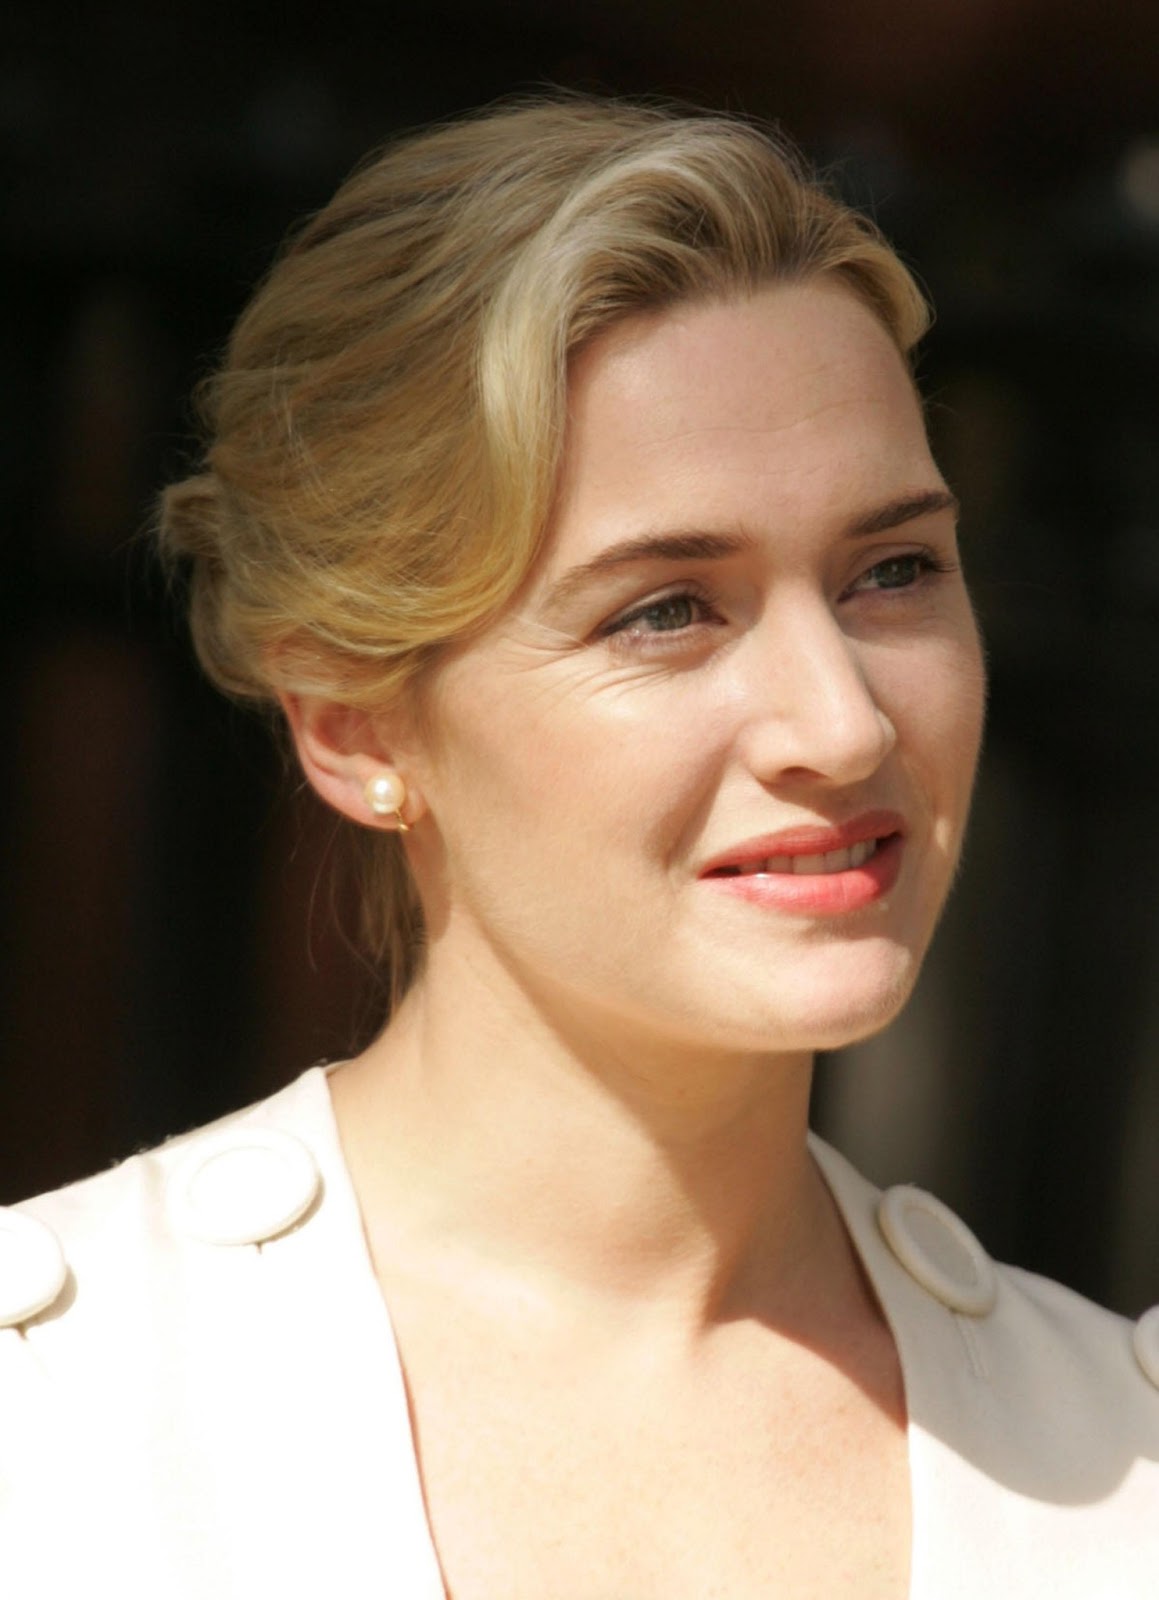 This Oscar-winning Titanic Actress who look hot even at 